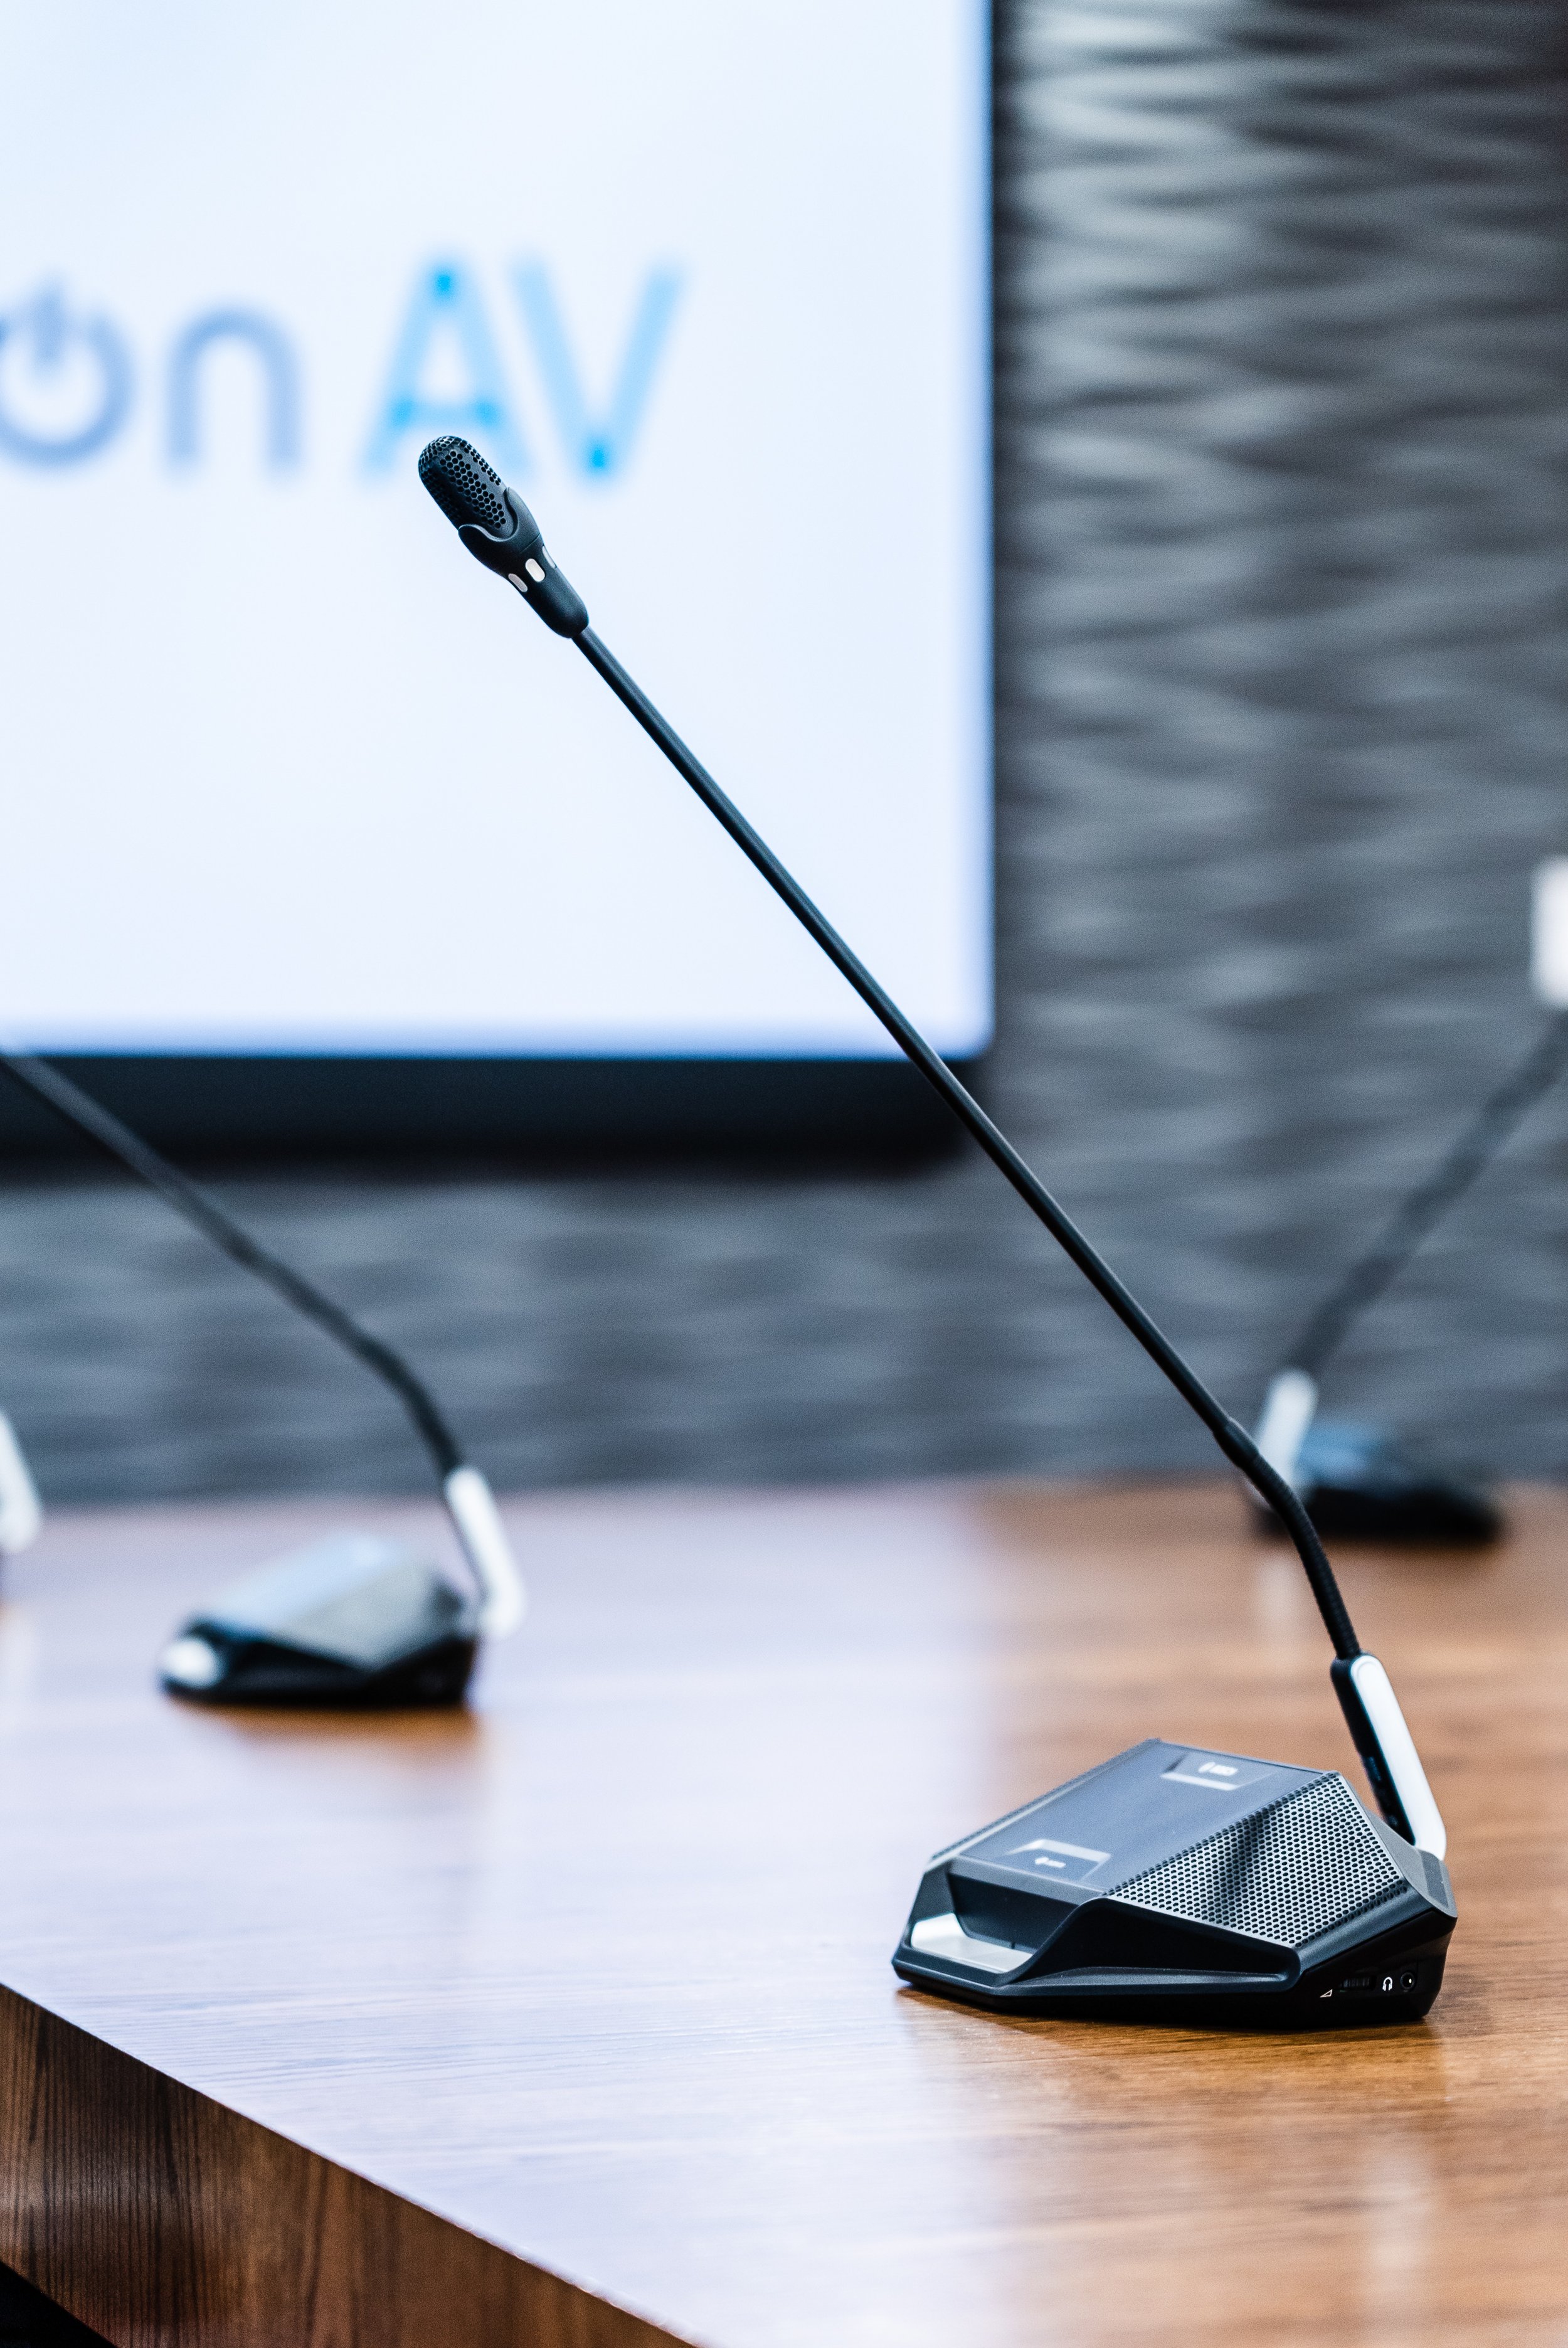  Bosch Dicentis gooseneck conferencing microphone on a boardroom table. 